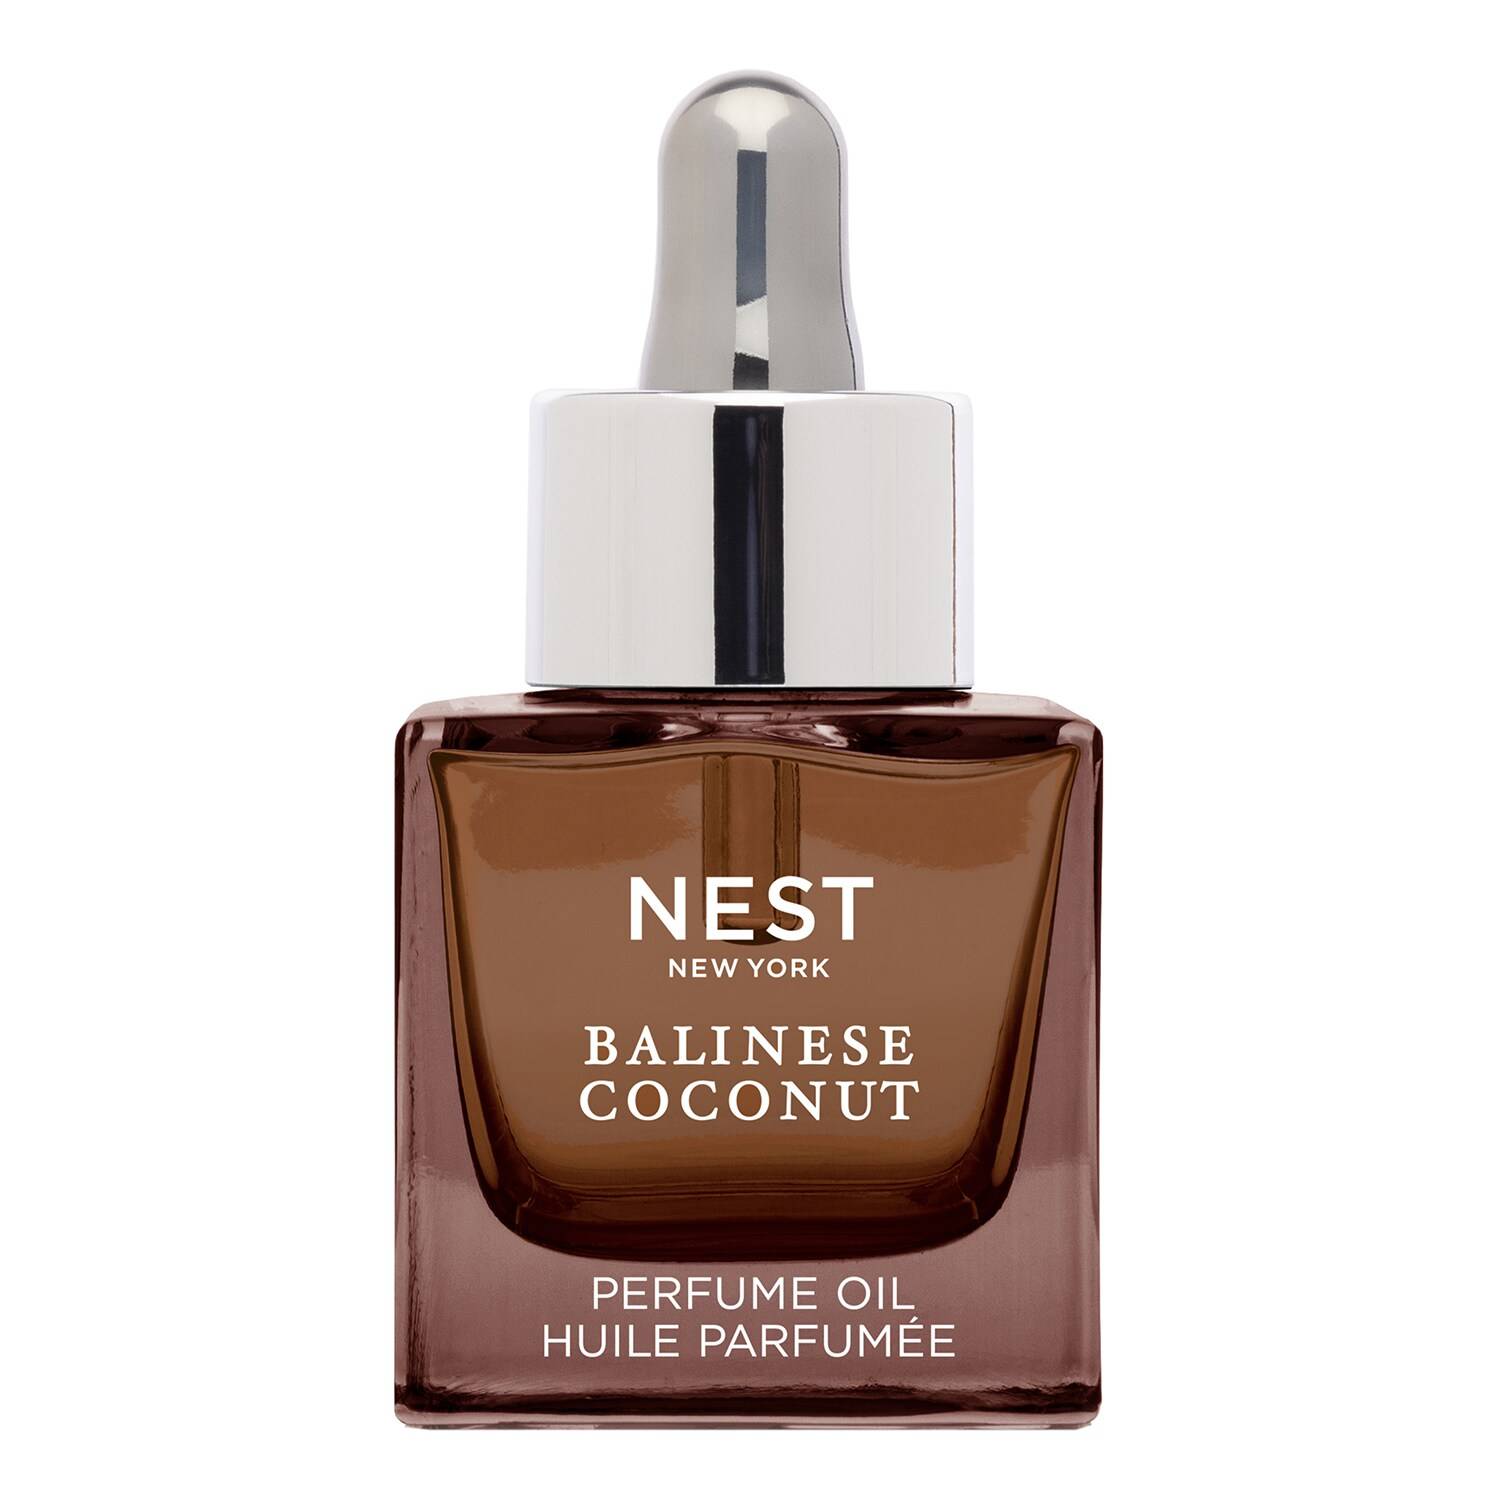 Nest New York Balinese Coconut Perfume Oil 30Ml